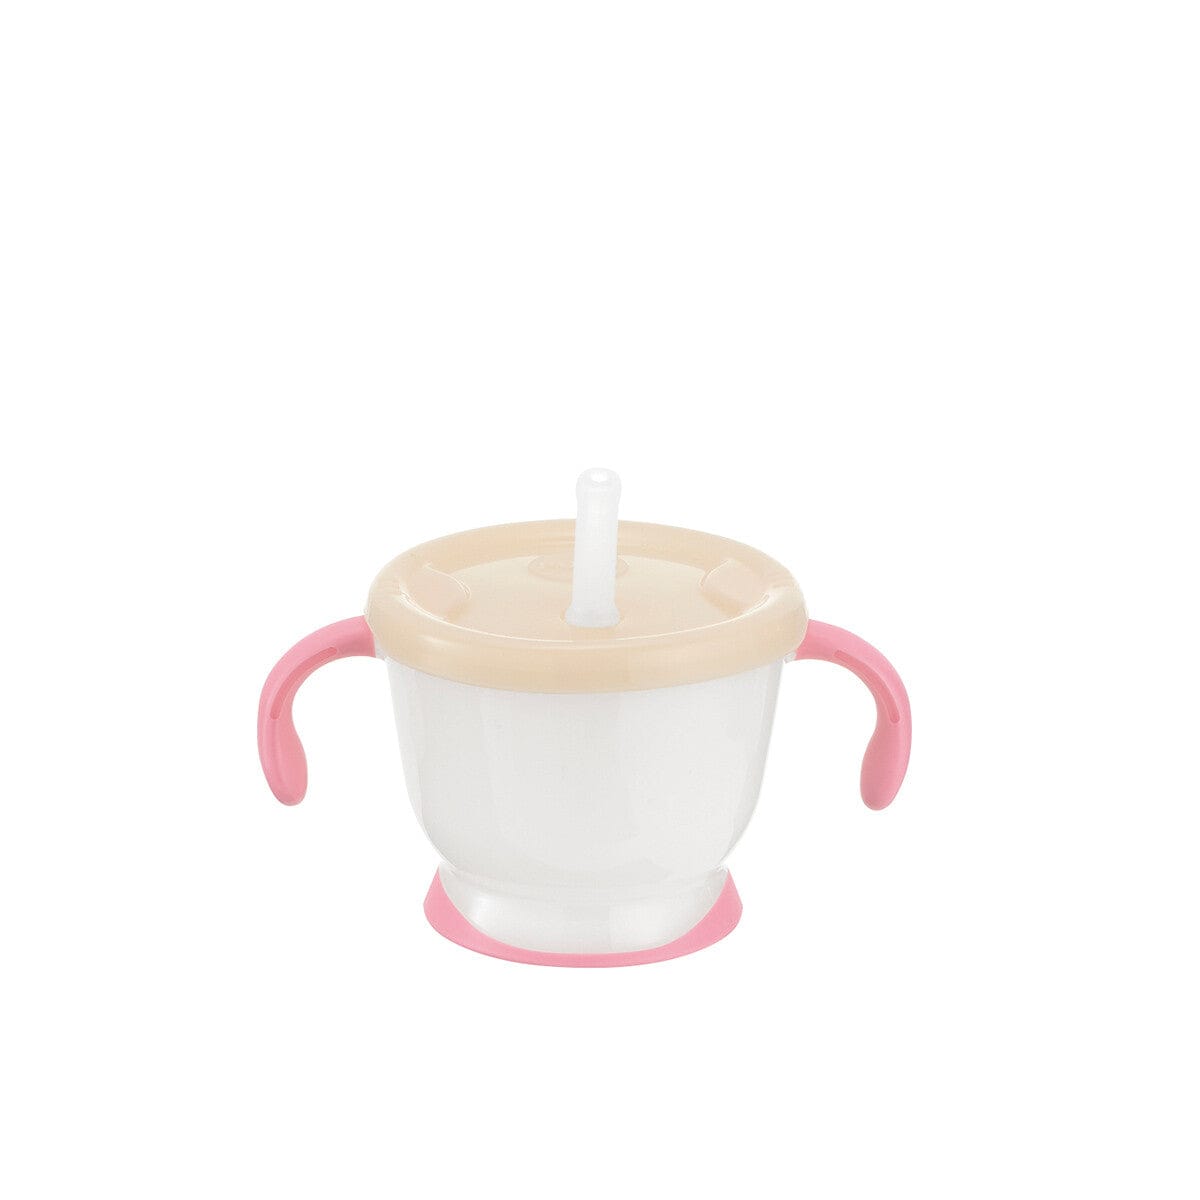 Richell - Aqulea Sippy Straw Baby Training Cup Mug - Pink Baby Cup 4973655220115 Durio.sg